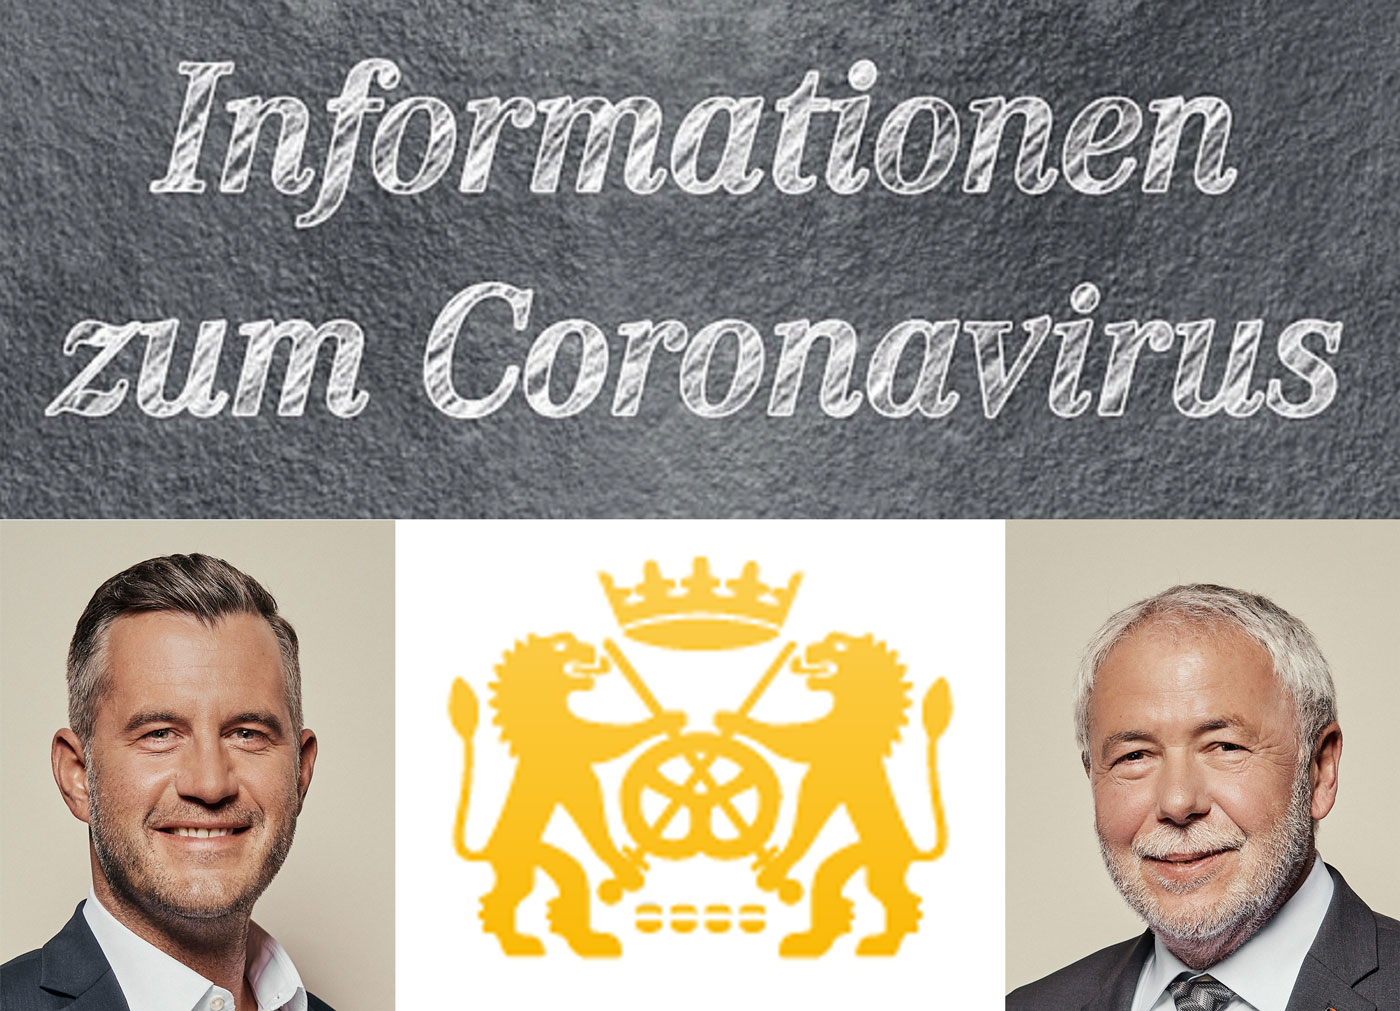 Corona: Zentralverband stellt Infos allen bereit